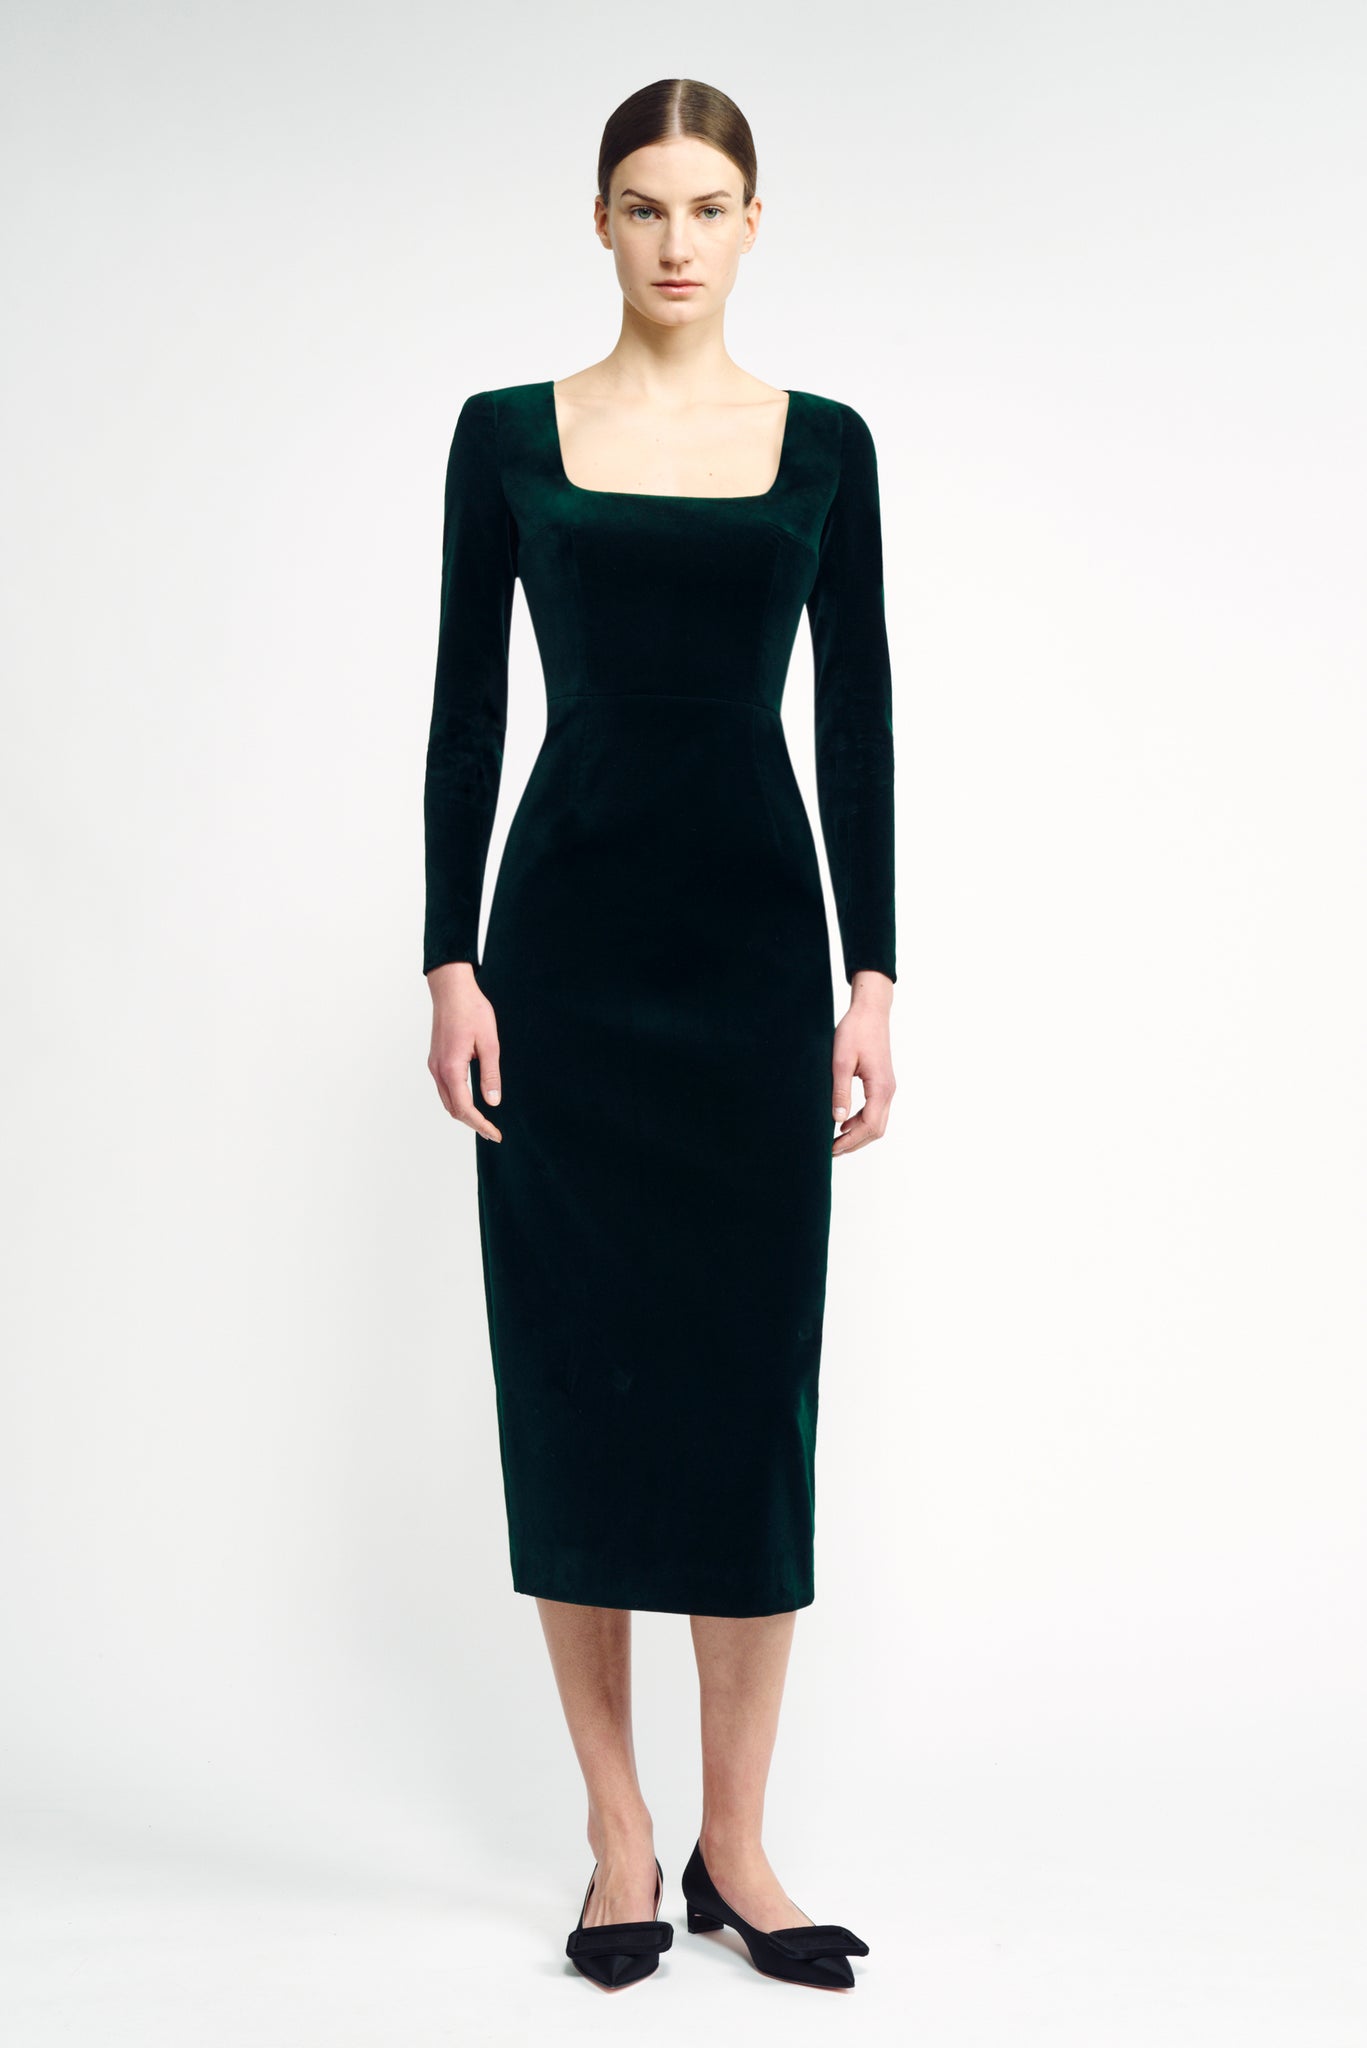 Nyla Dress | Dark Green Velvet Square Neck Pencil Dress | Emilia Wickstead